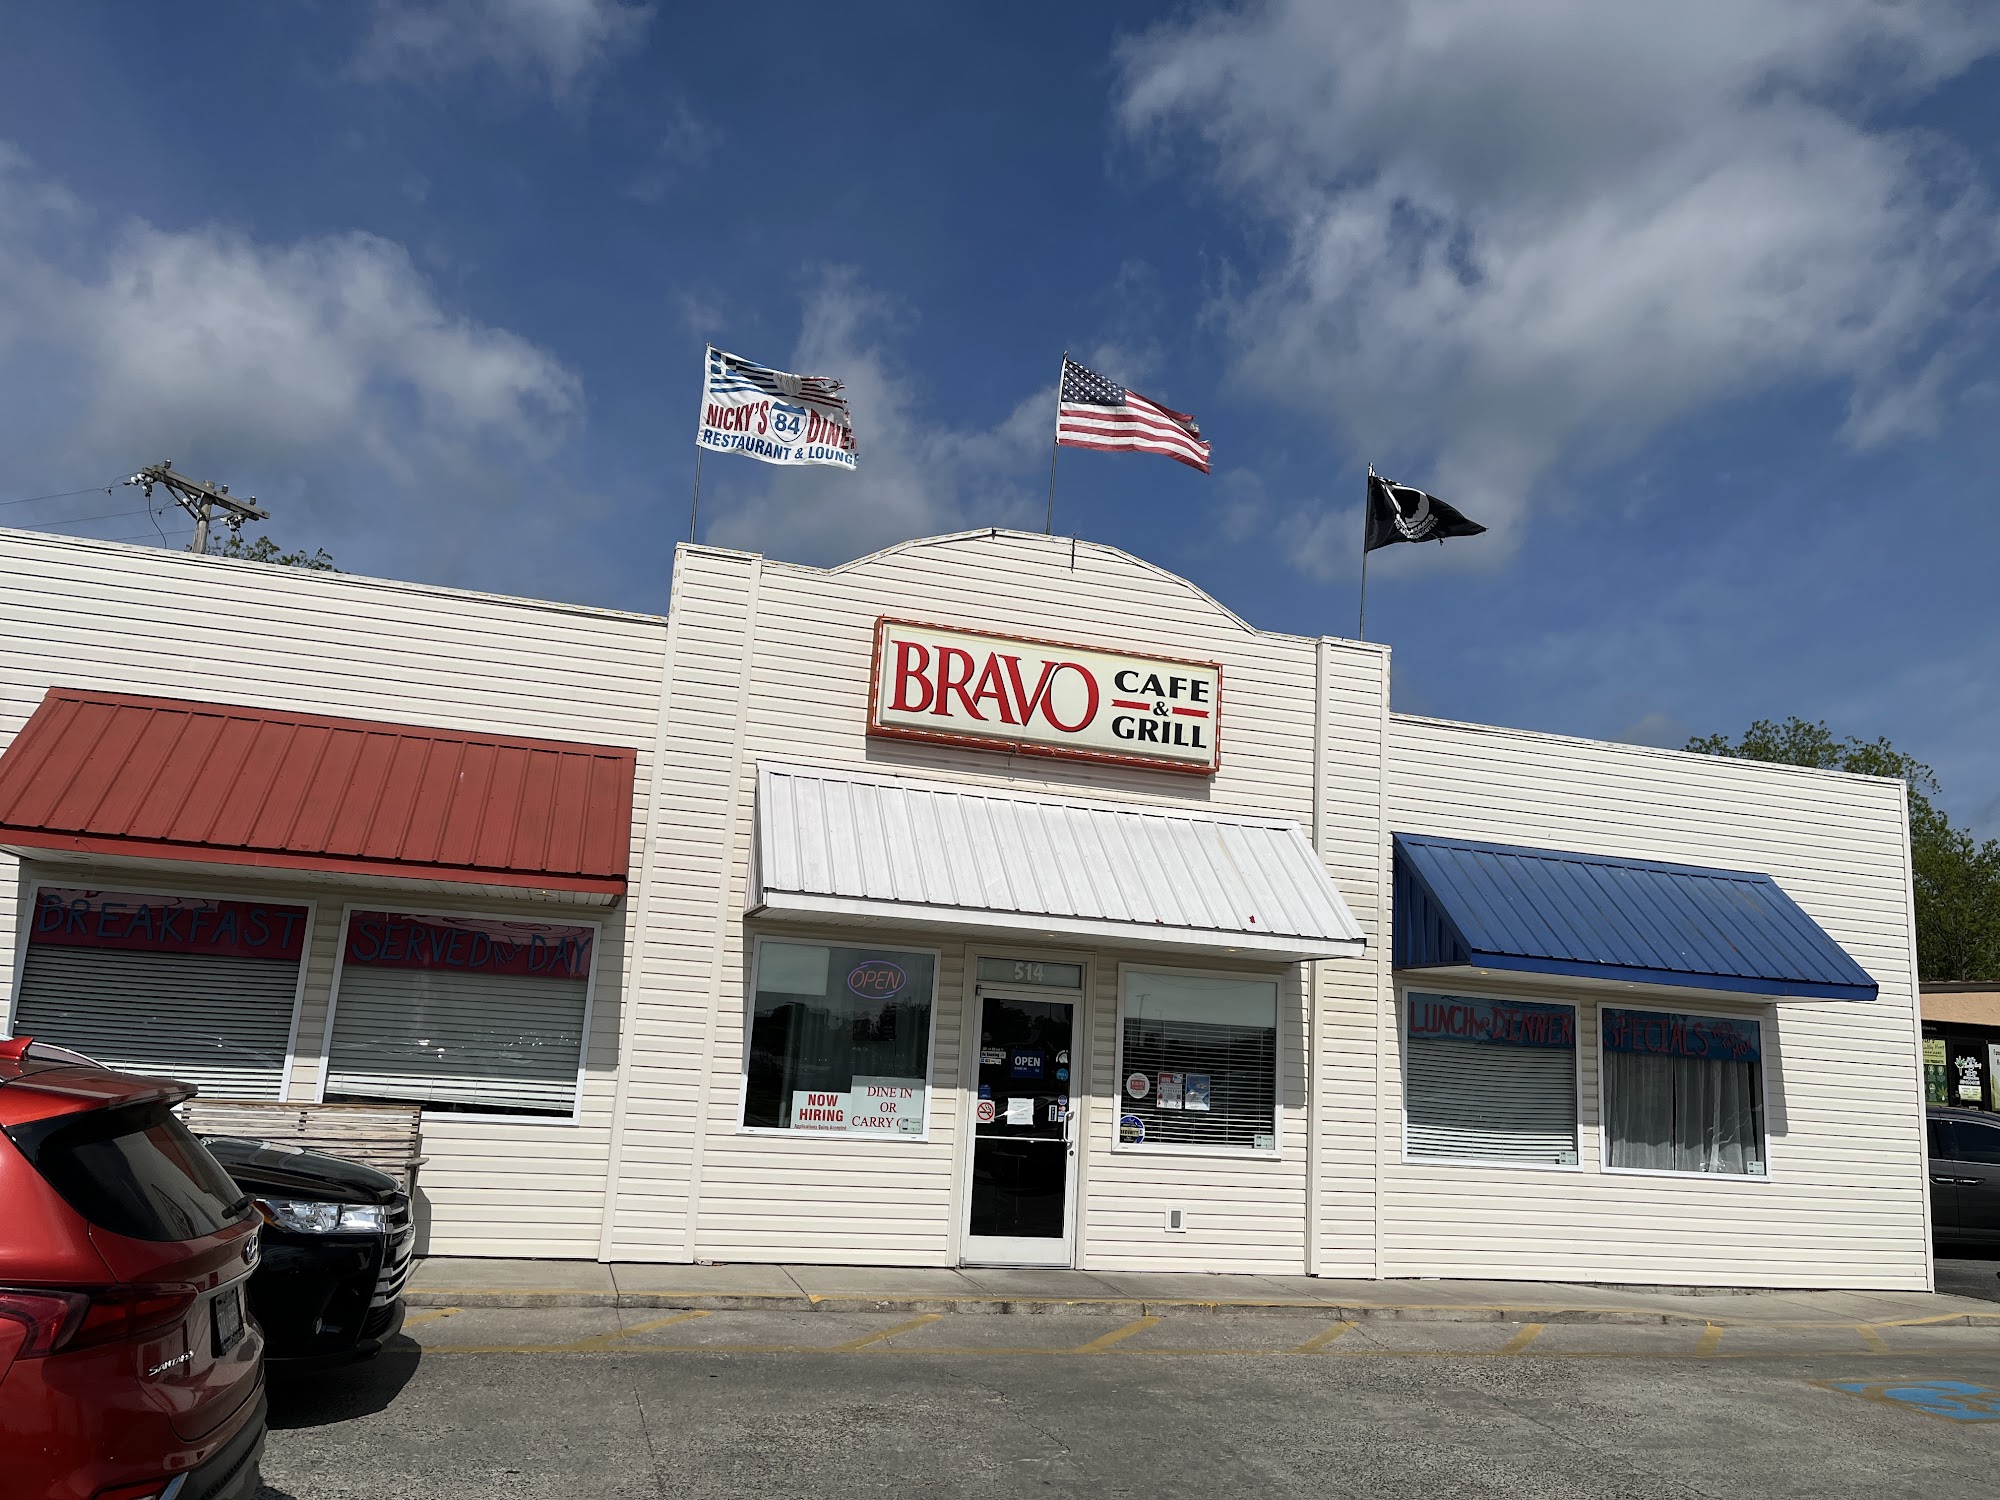 Bravo's Cafe & Grill